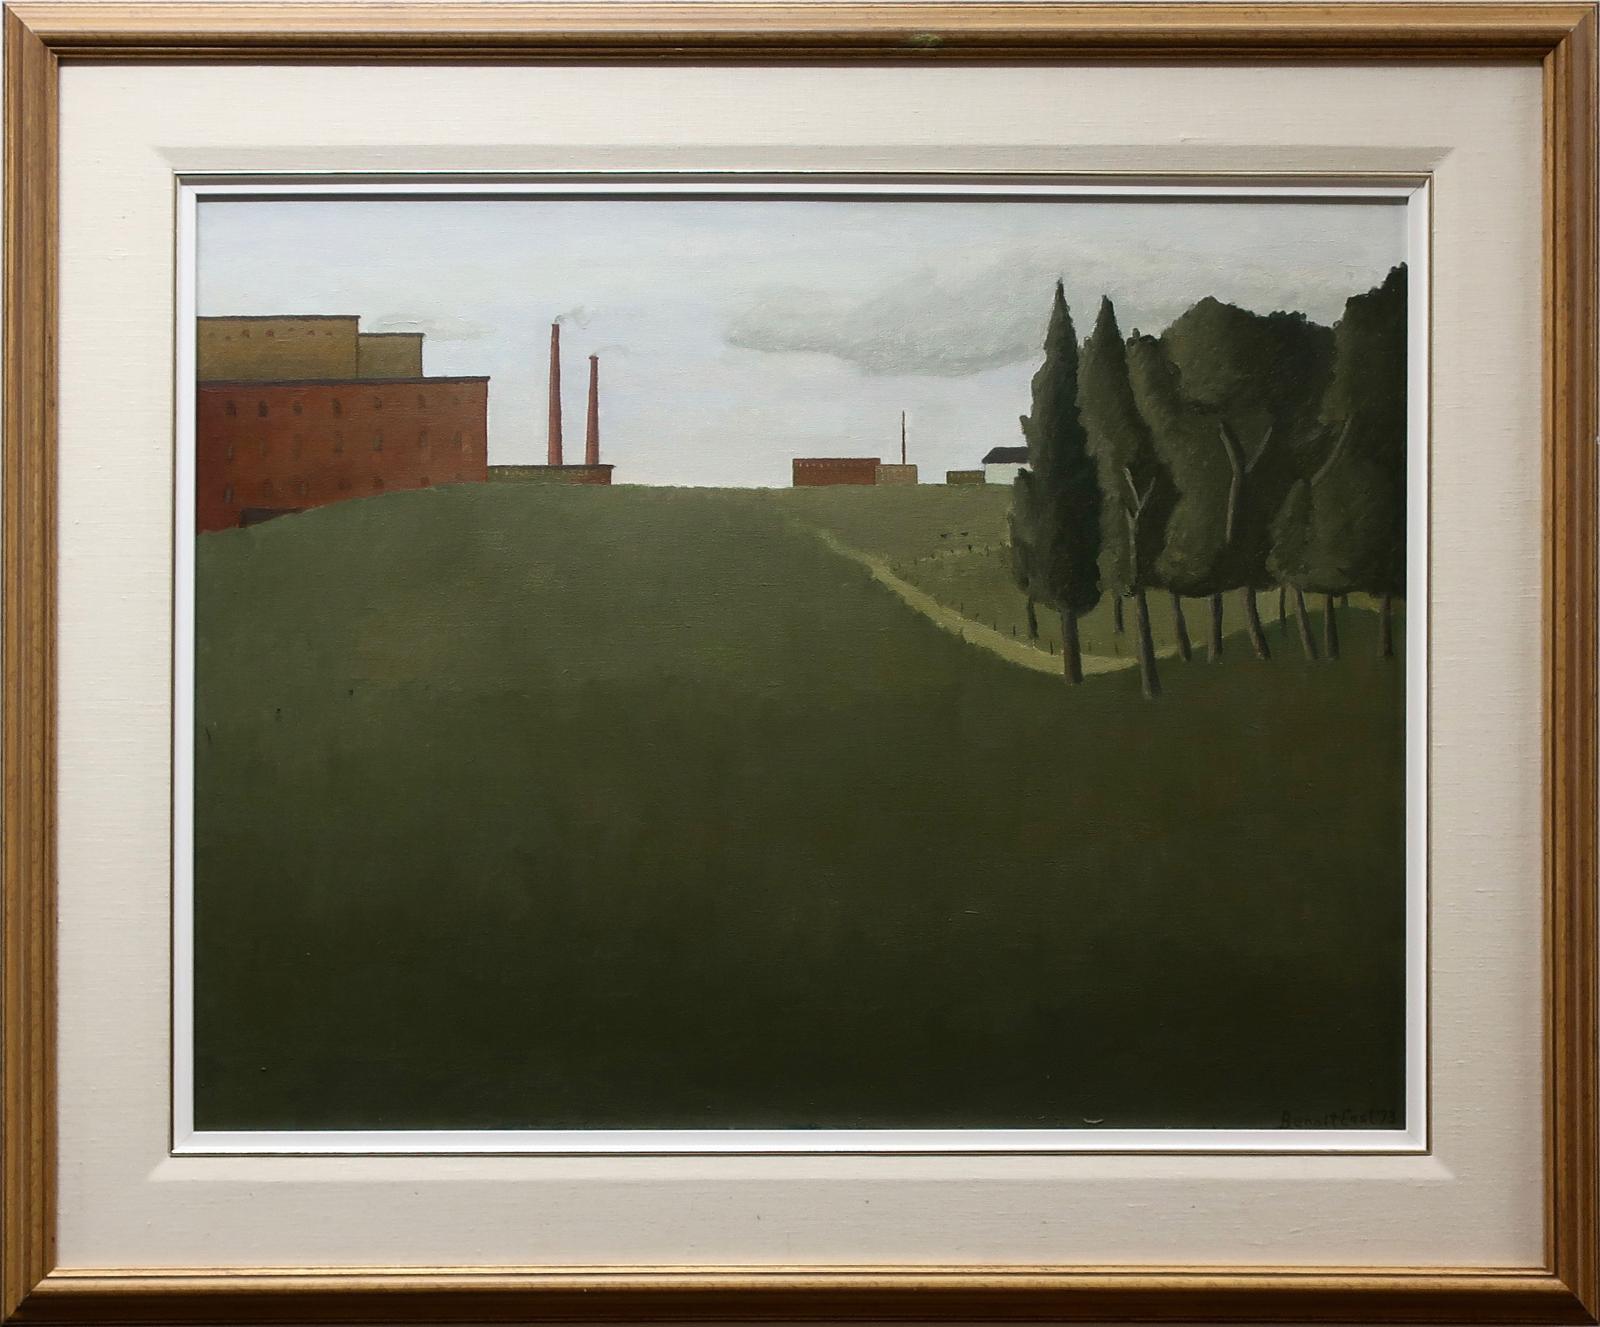 Benoît East (1915-2016) - Untitled (Landscape With Factories)